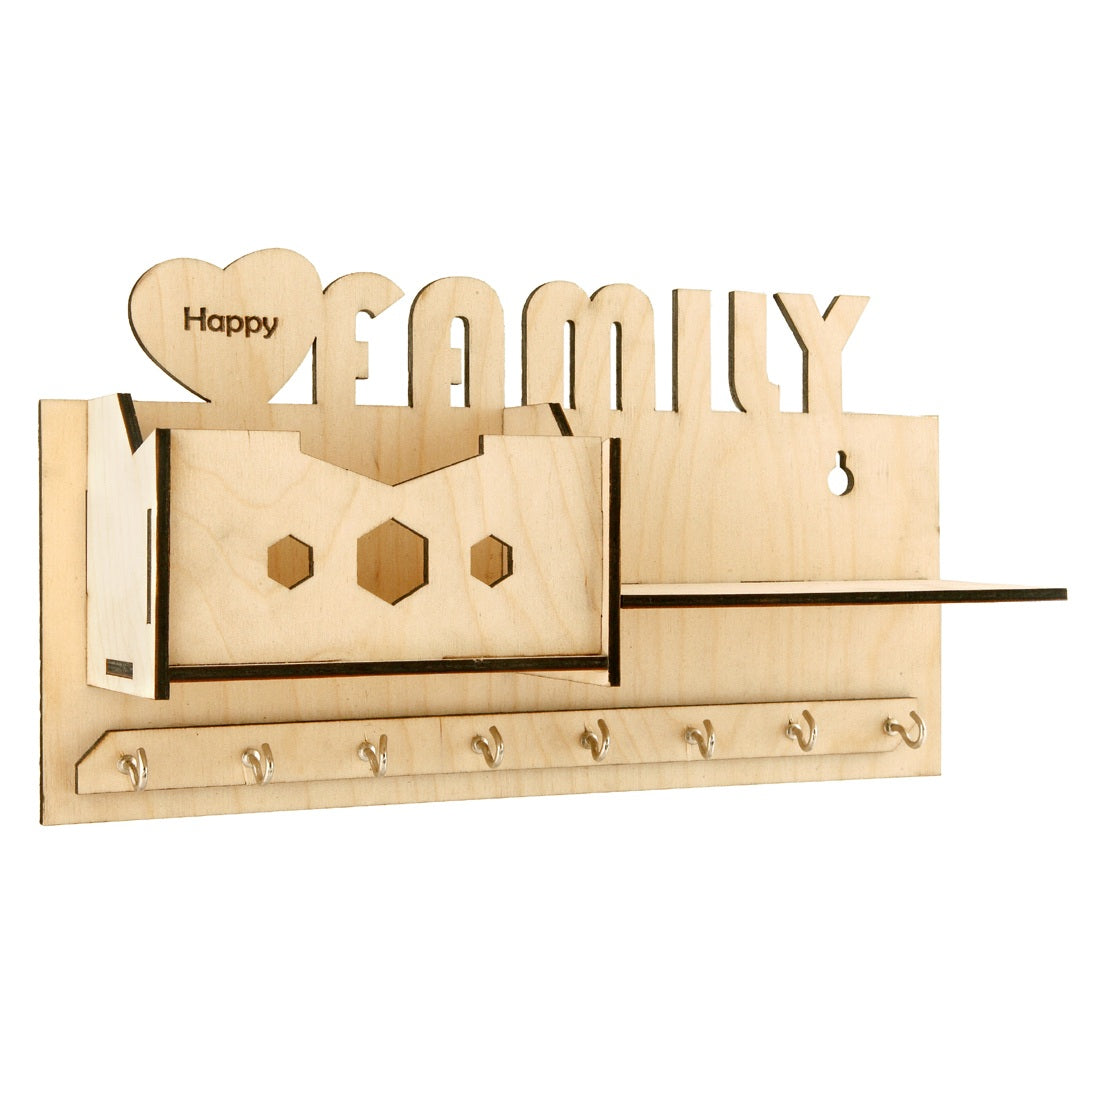 Family Handmade Key Holder: Organize with Love